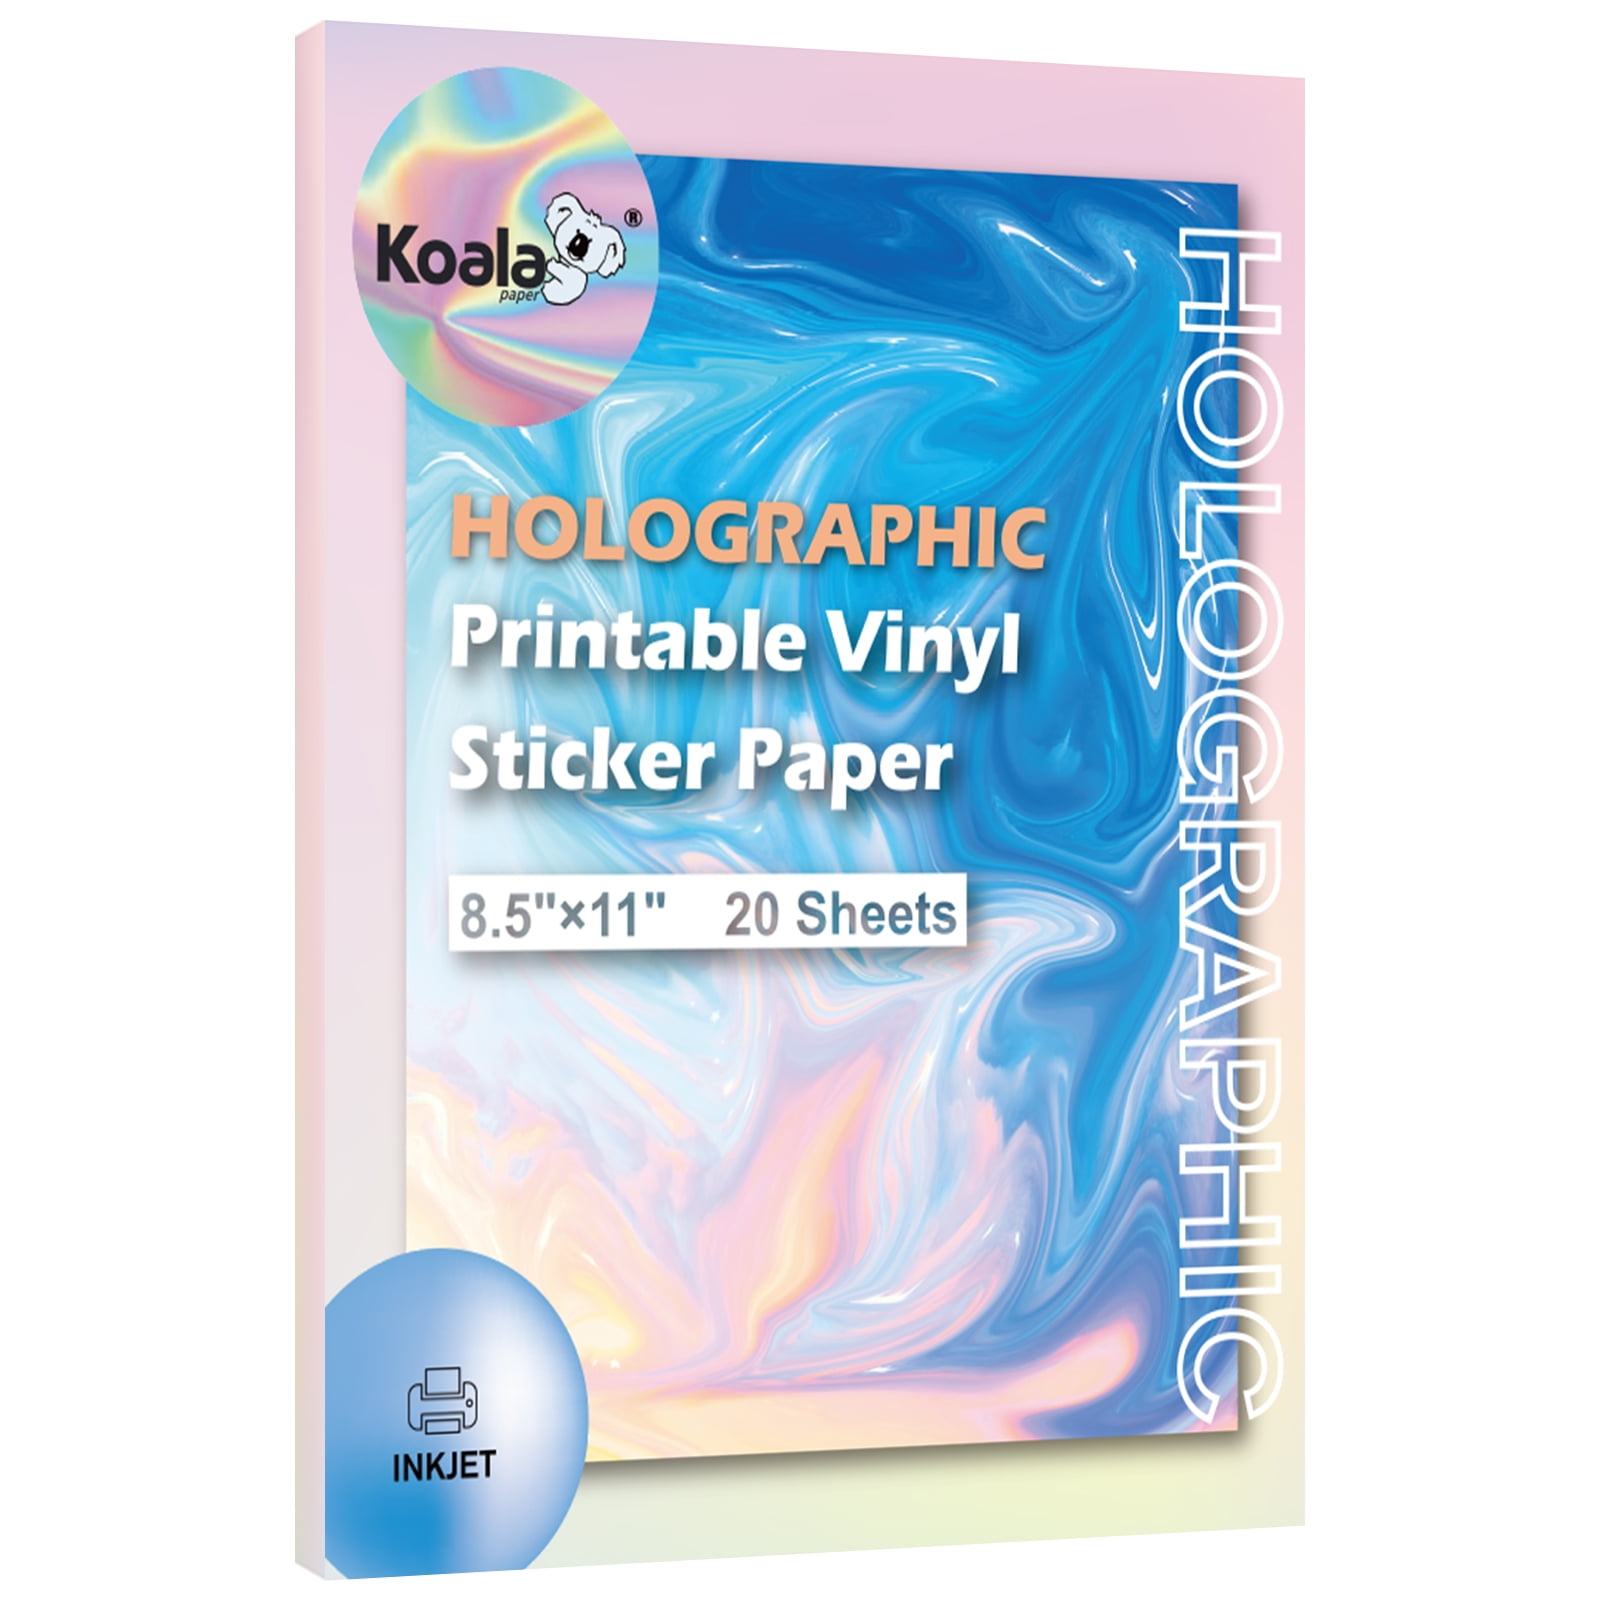 UPGRADED Koala Printable Holographic Vinyl Sticker Paper Glossy